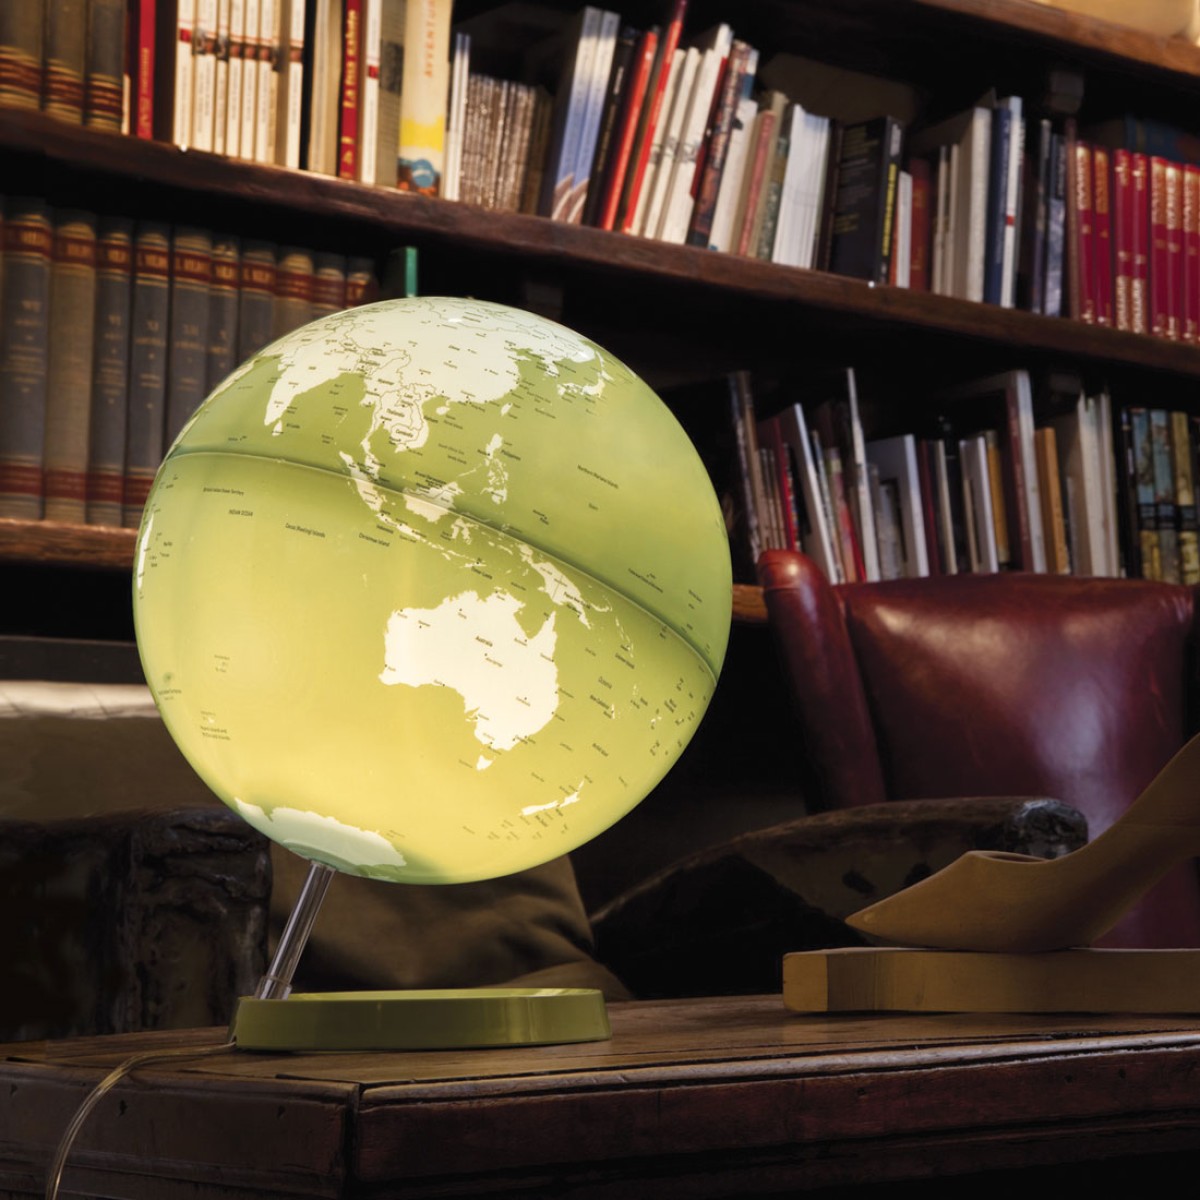 Atmosphere - Illuminated Globe - Pistachio